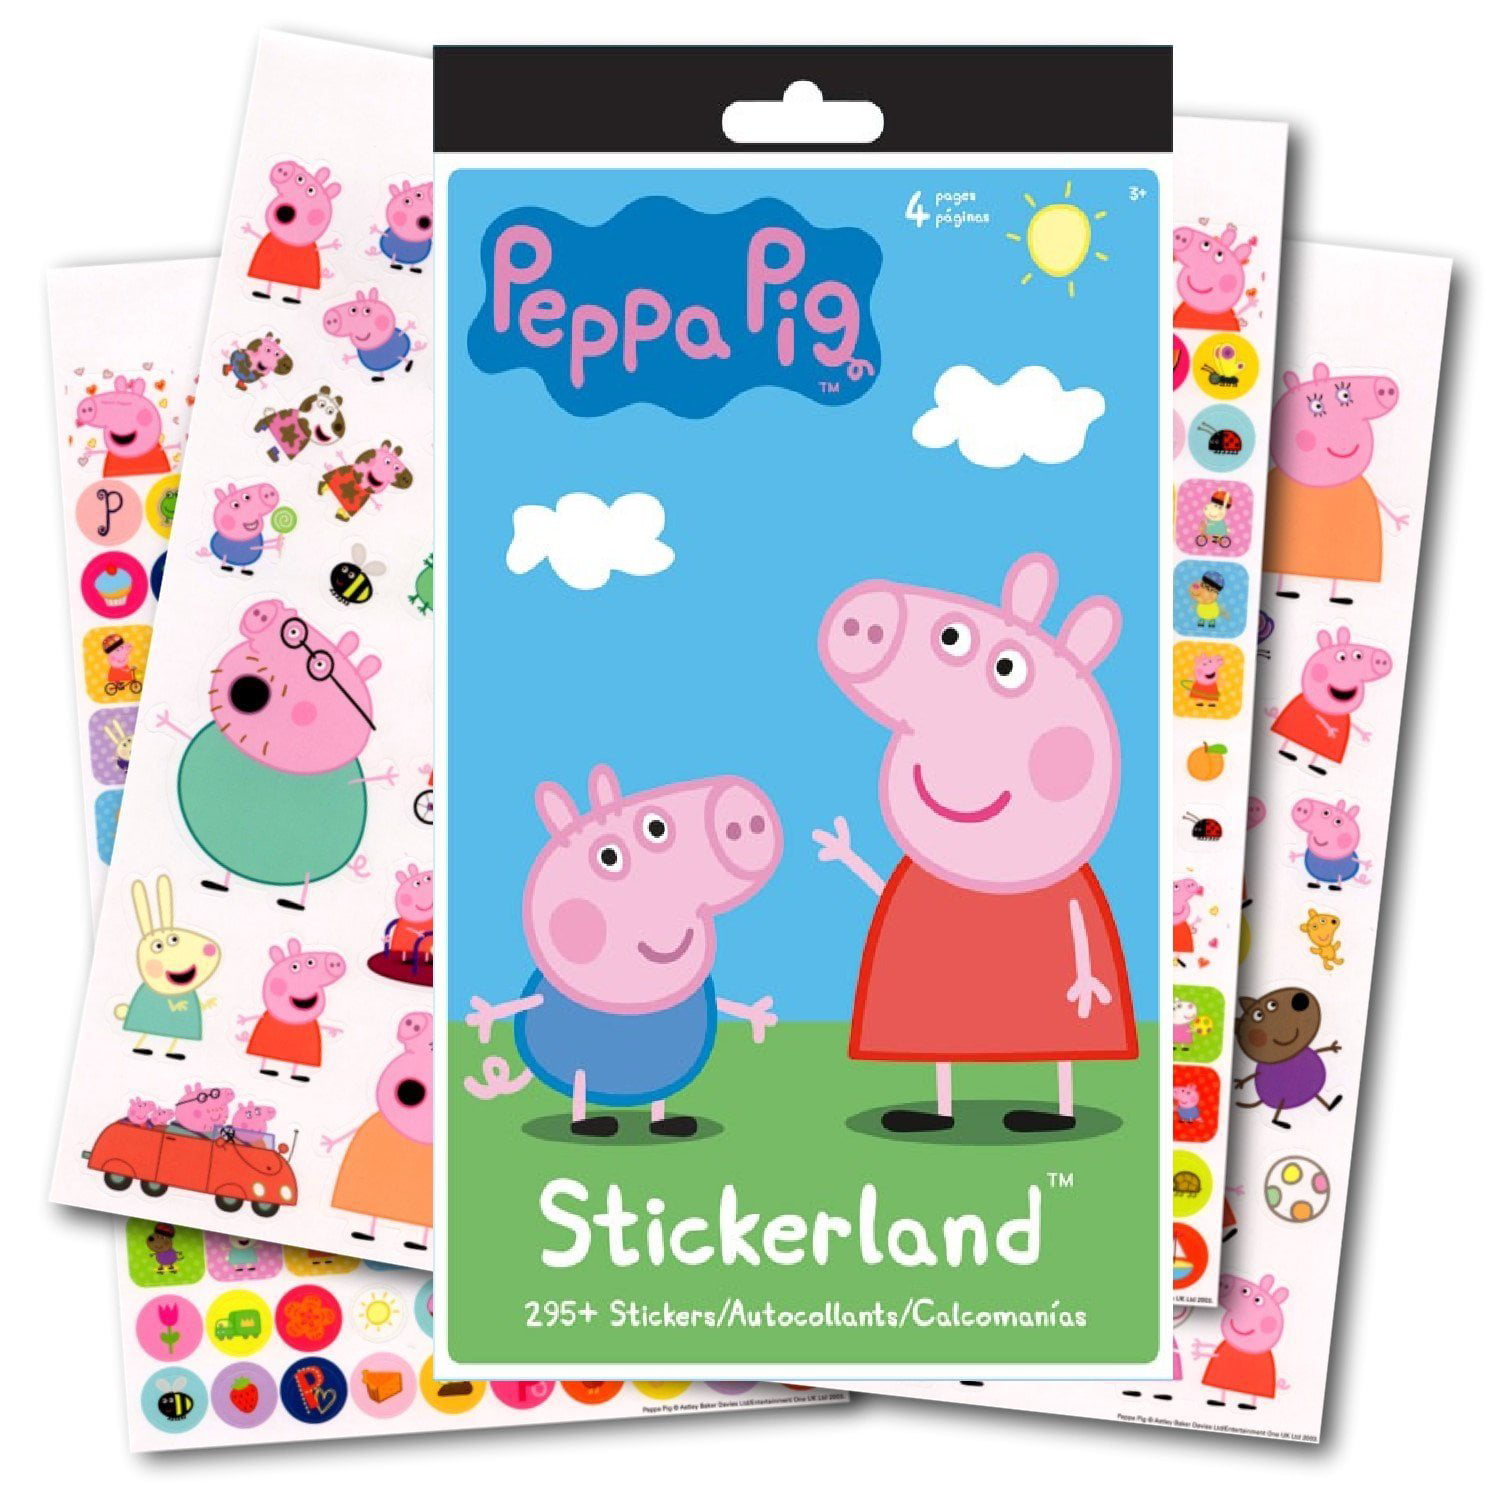 Stickerland Peppa Pig Stickers 295 Stickers